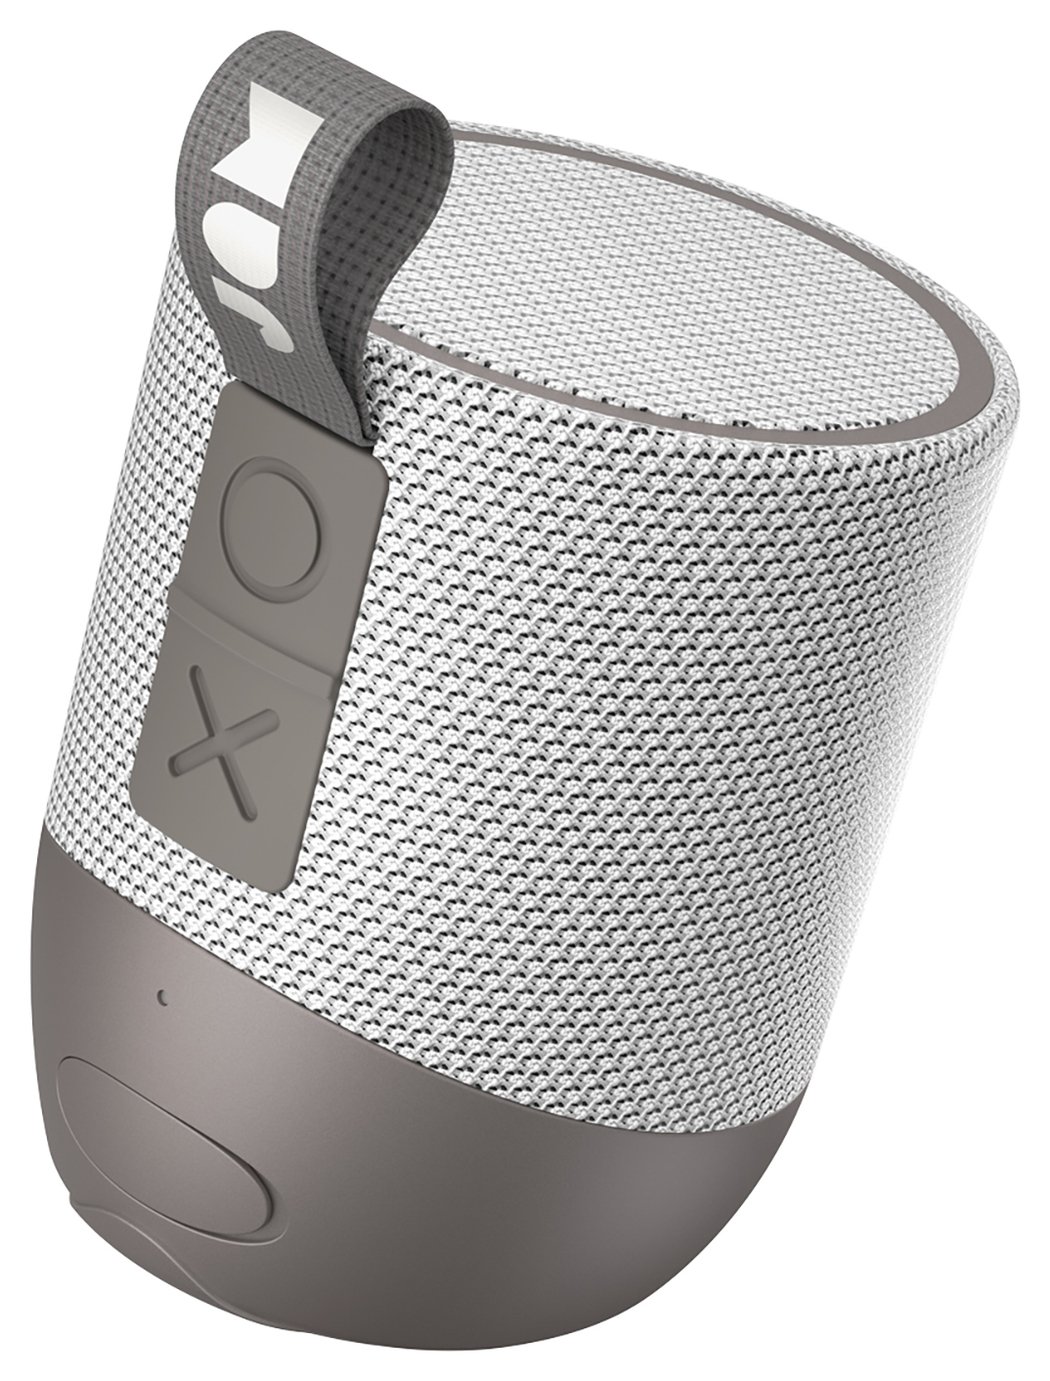 Jam Double Chill Bluetooth Speaker - Grey